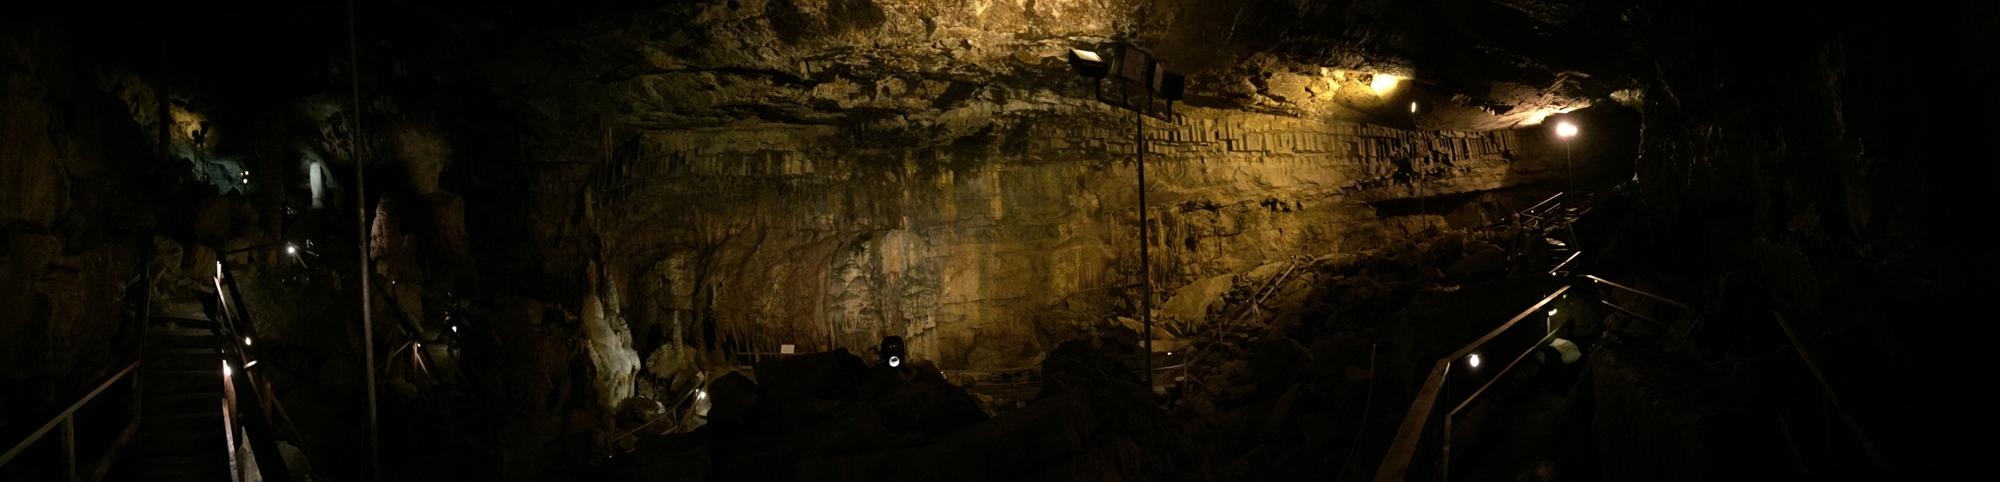 Lost World Caverns (West Virginia)